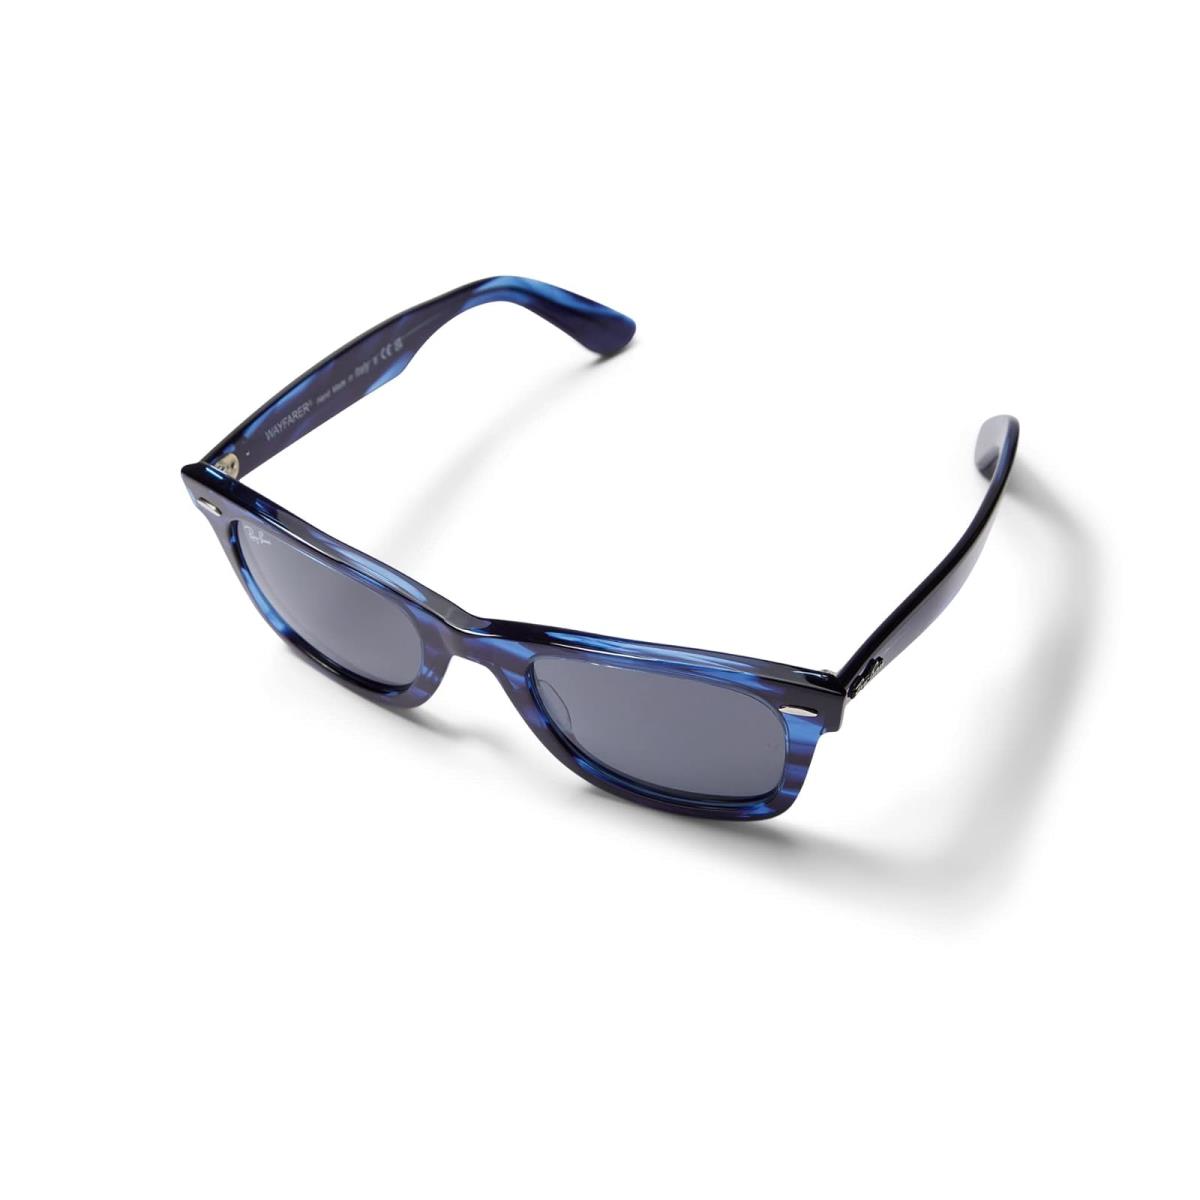 Unisex Sunglasses Ray-ban RB2140 Wayfarer Sunglasses Striped Blue/Blue